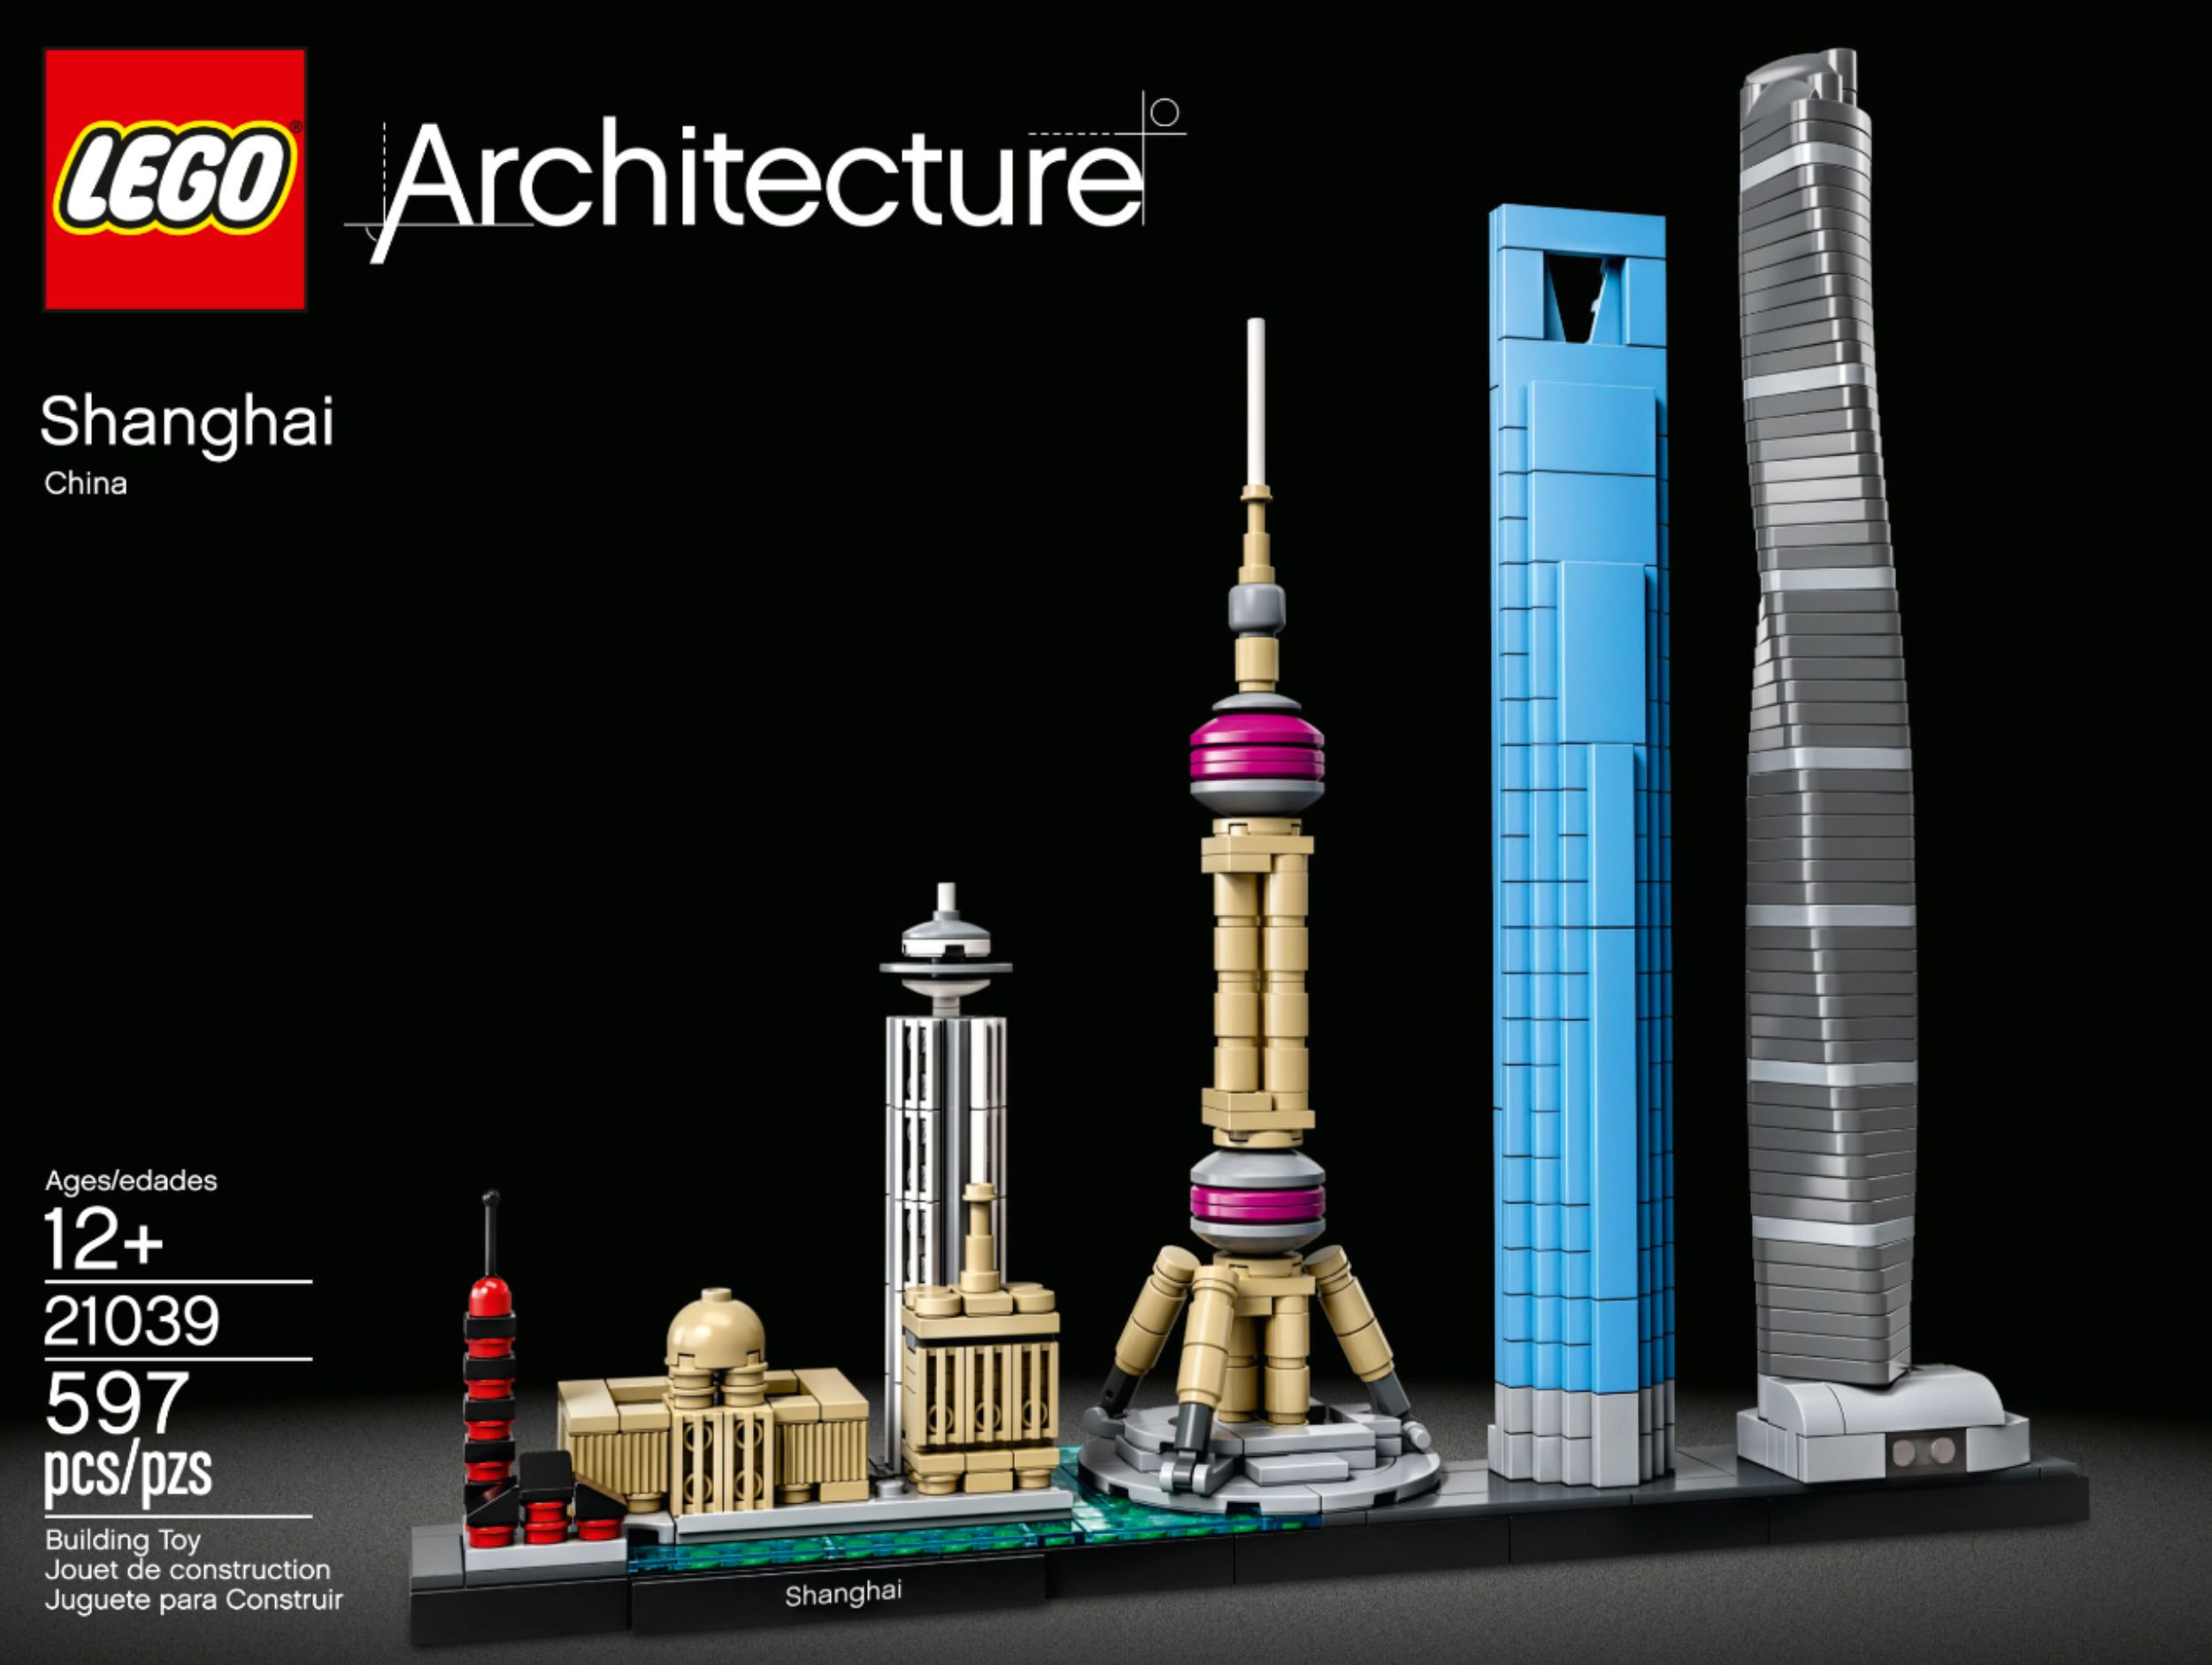 NISB LEGO 21039 Architecture Shanghai Skyline BrandNew Factory Sealed Box 